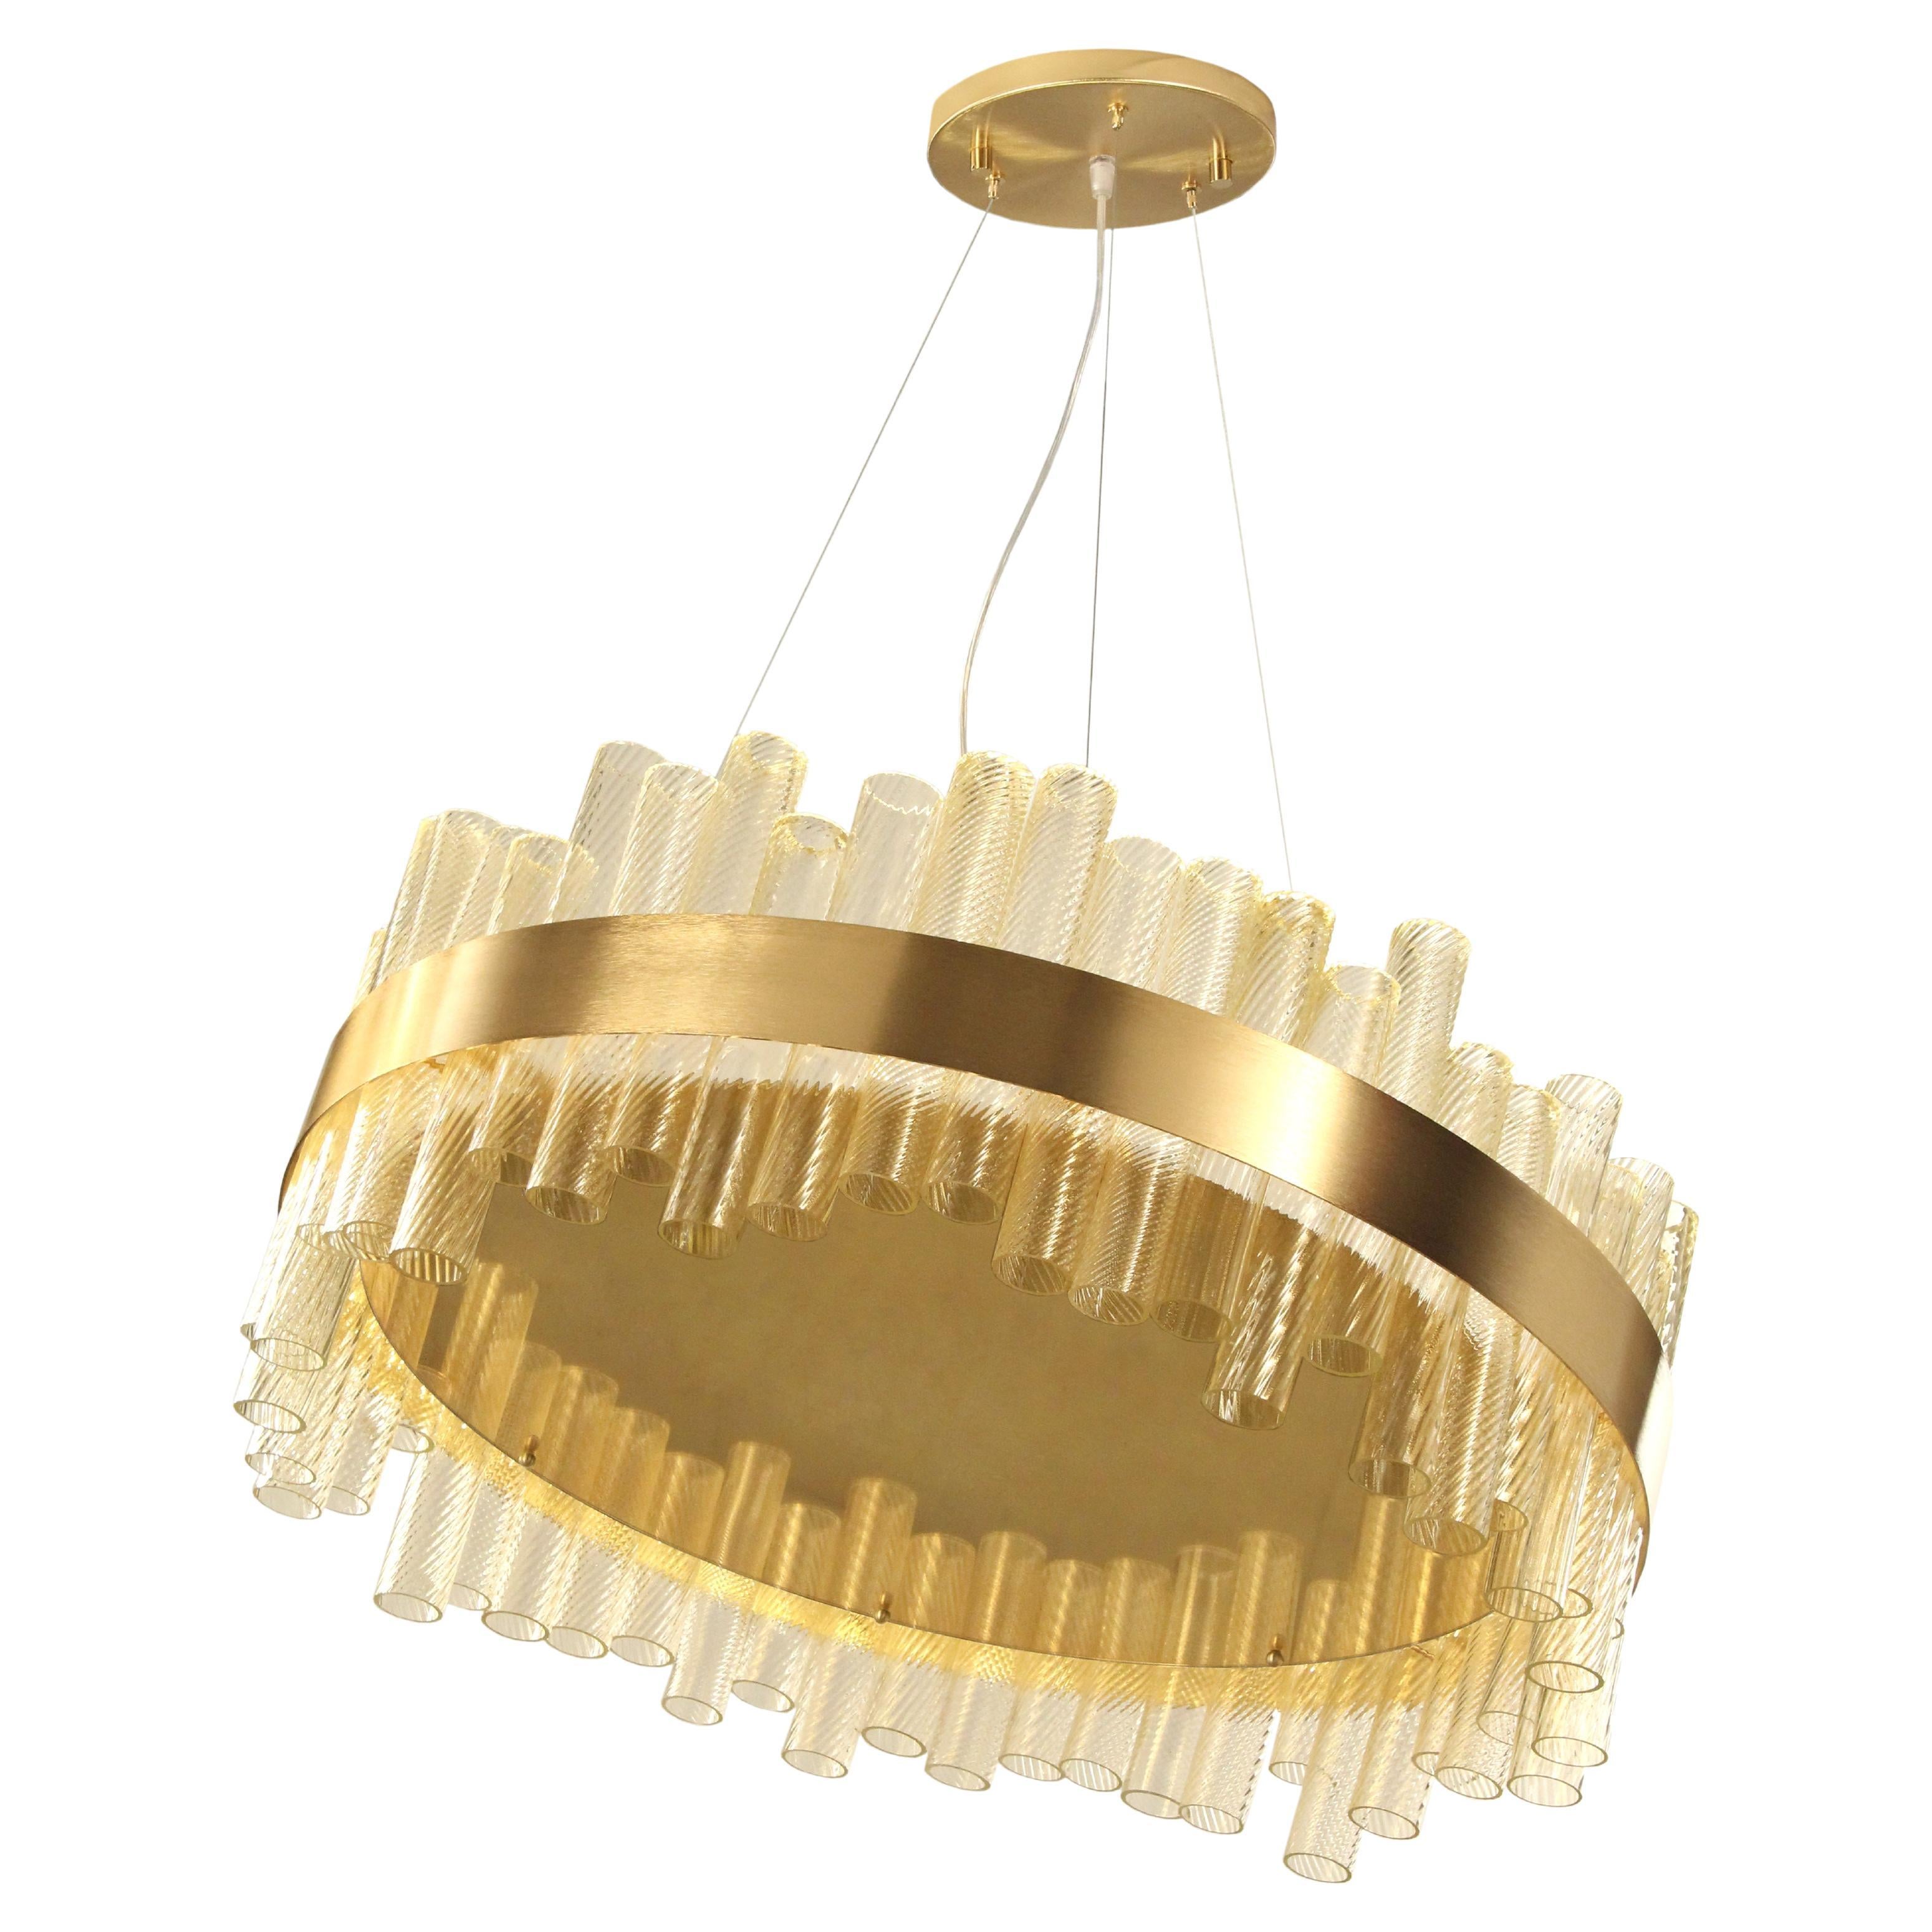 Artistic Suspension Gold Leaf Glass Tubes, Brushed Gold Fixture by Multiforme For Sale